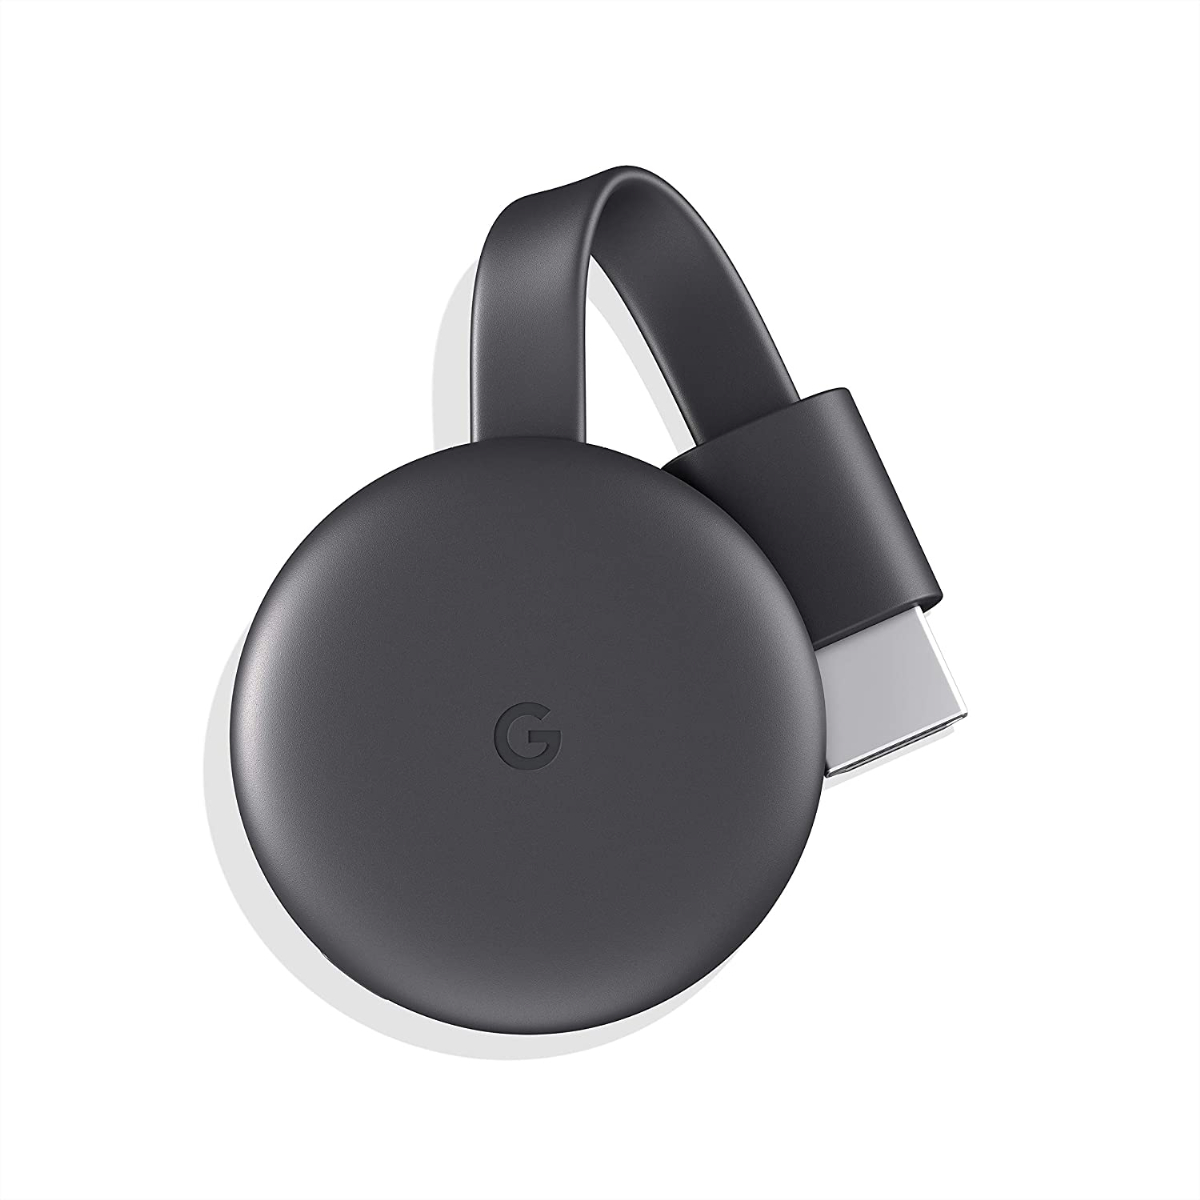 Google グーグル Chromecast (クロームキャスト) チャコール 【GA00439-JP】を2名様にプレゼント！